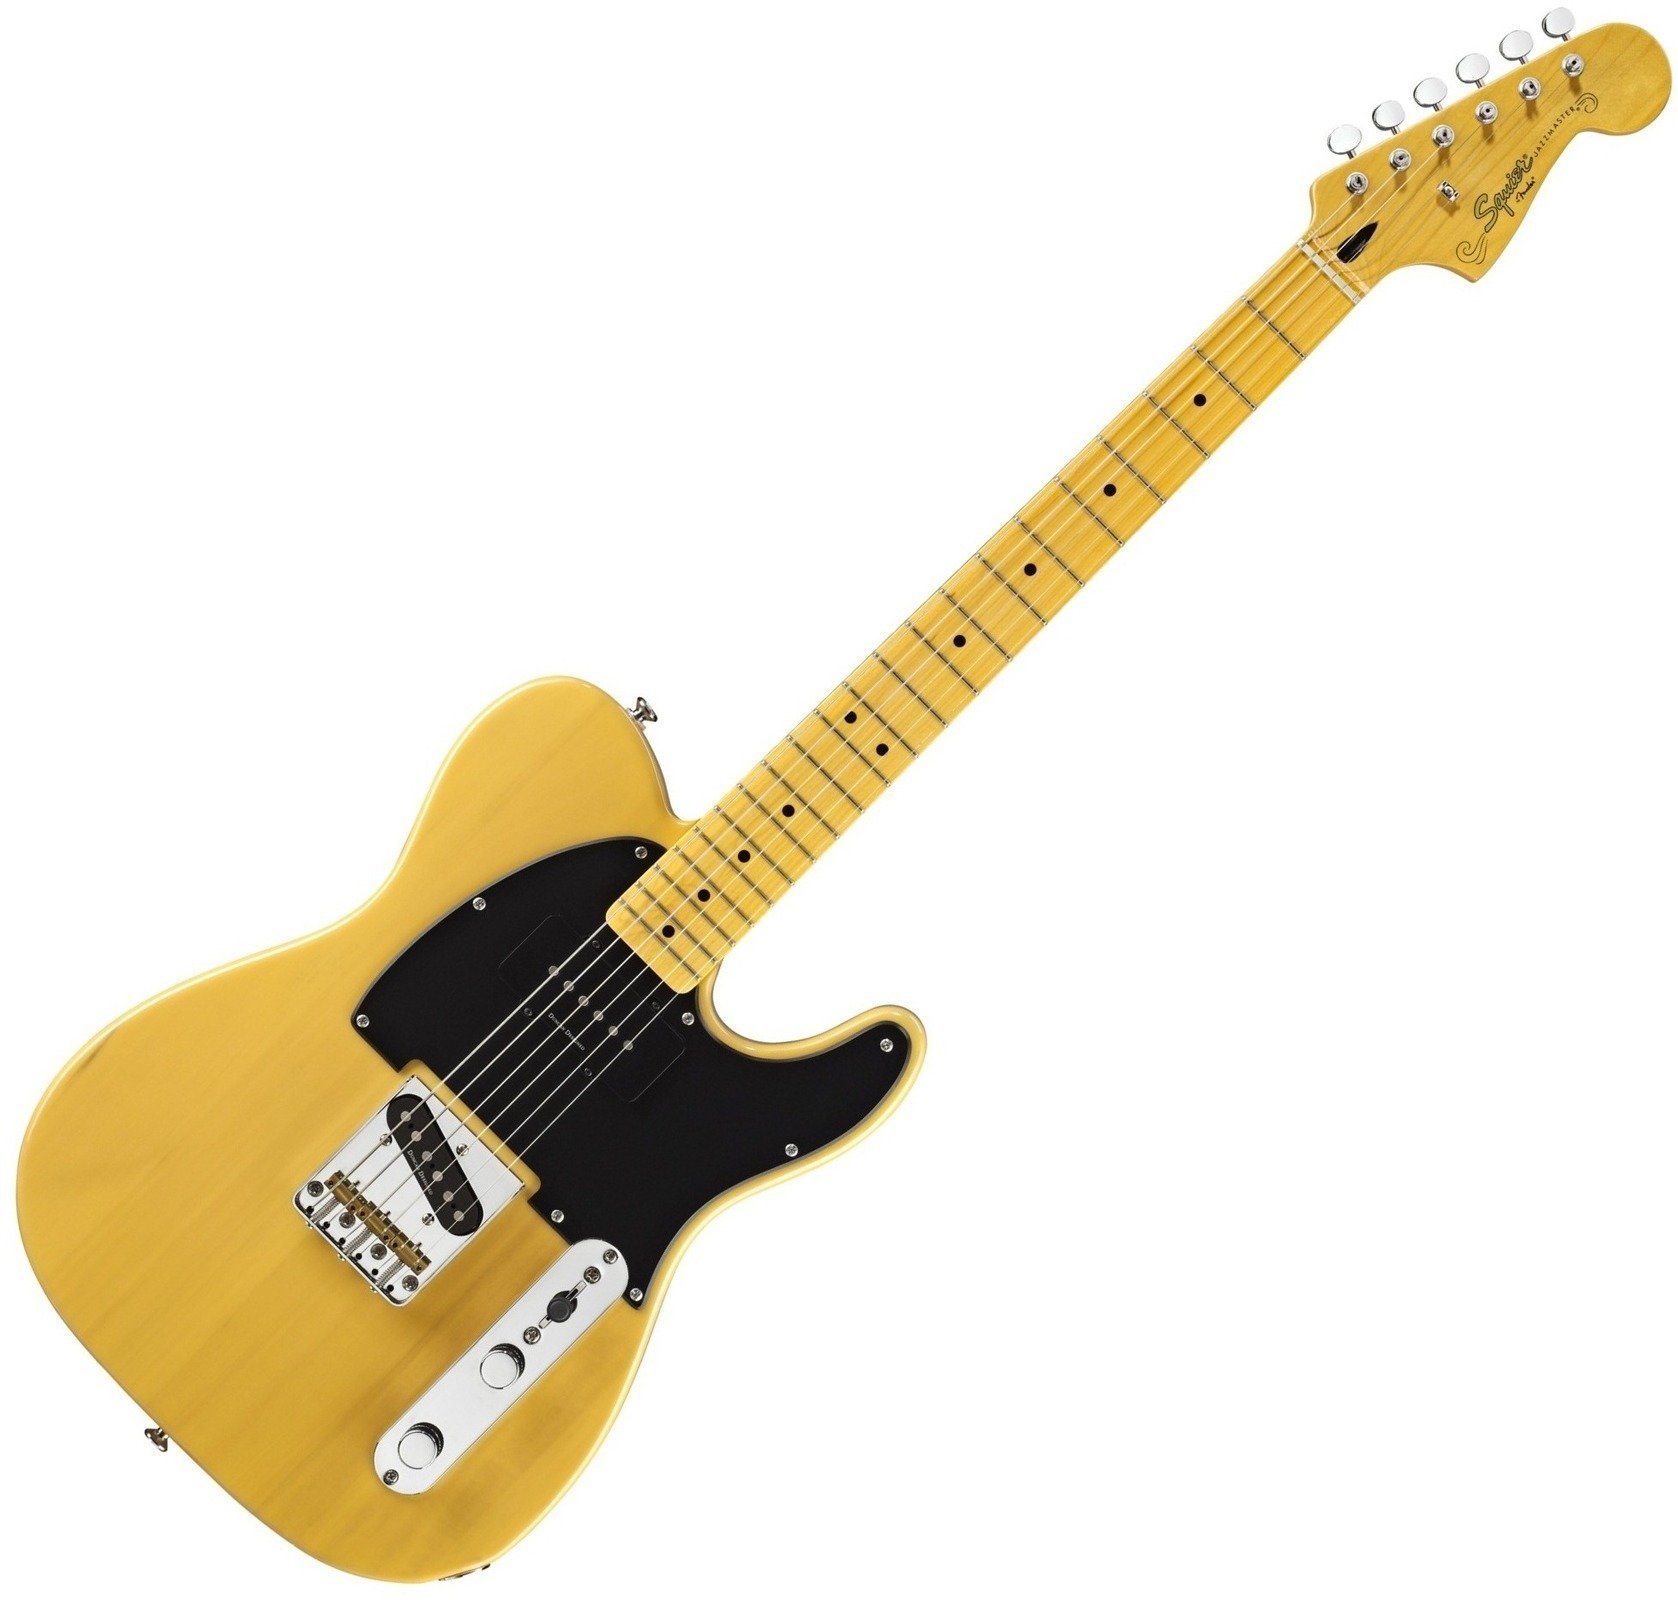 E-Gitarre Fender Squier Vintage Modified Telecaster Special White Blonde